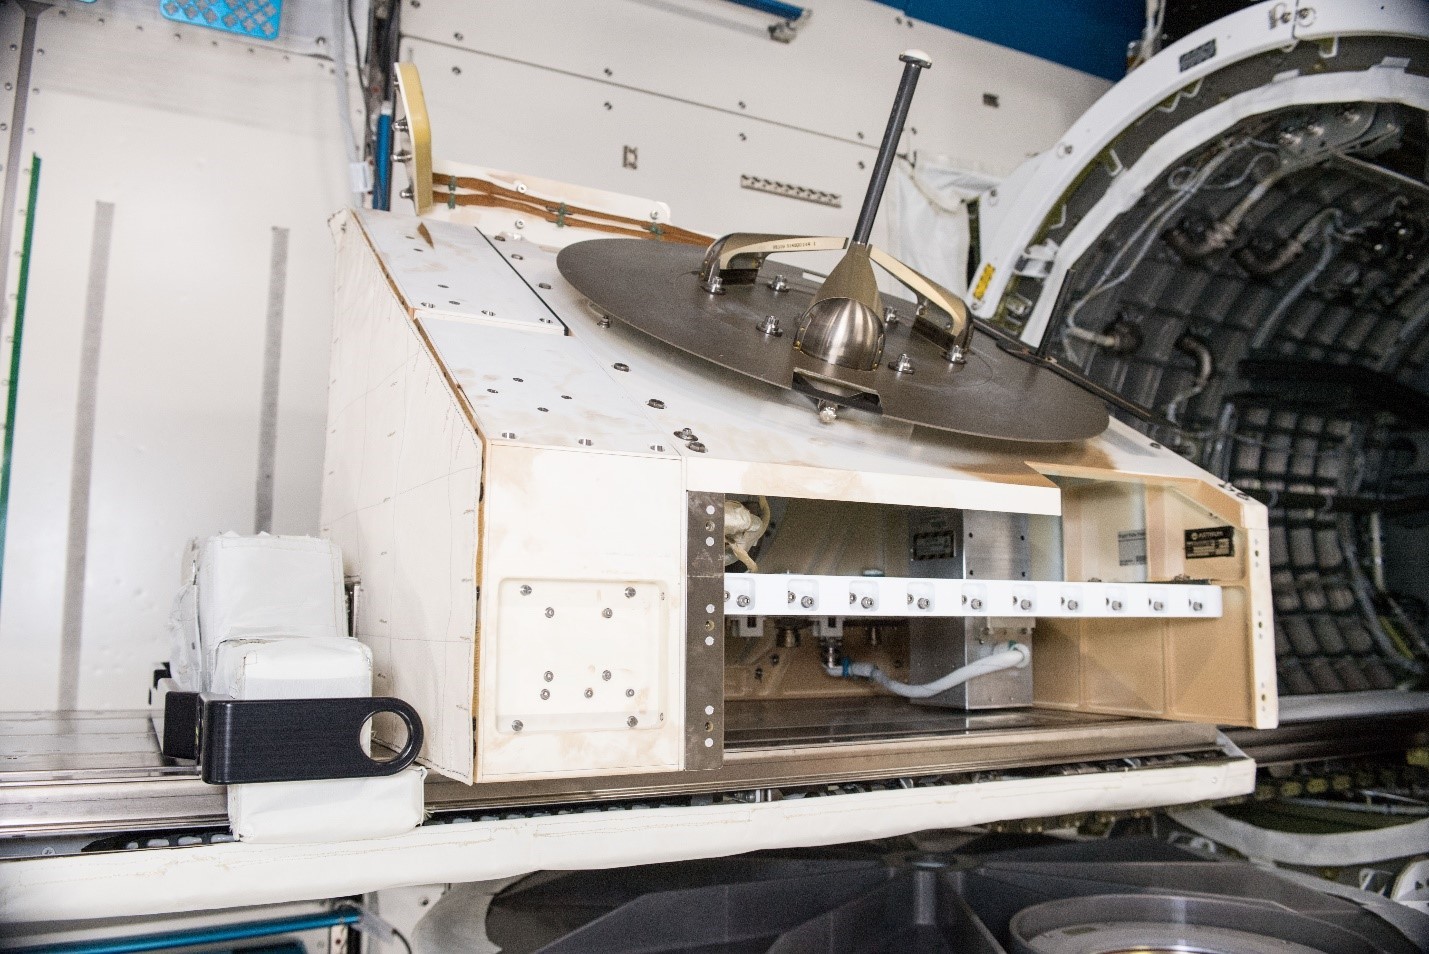 Orbital Sidekick implementa sistema de sensores en la ISS